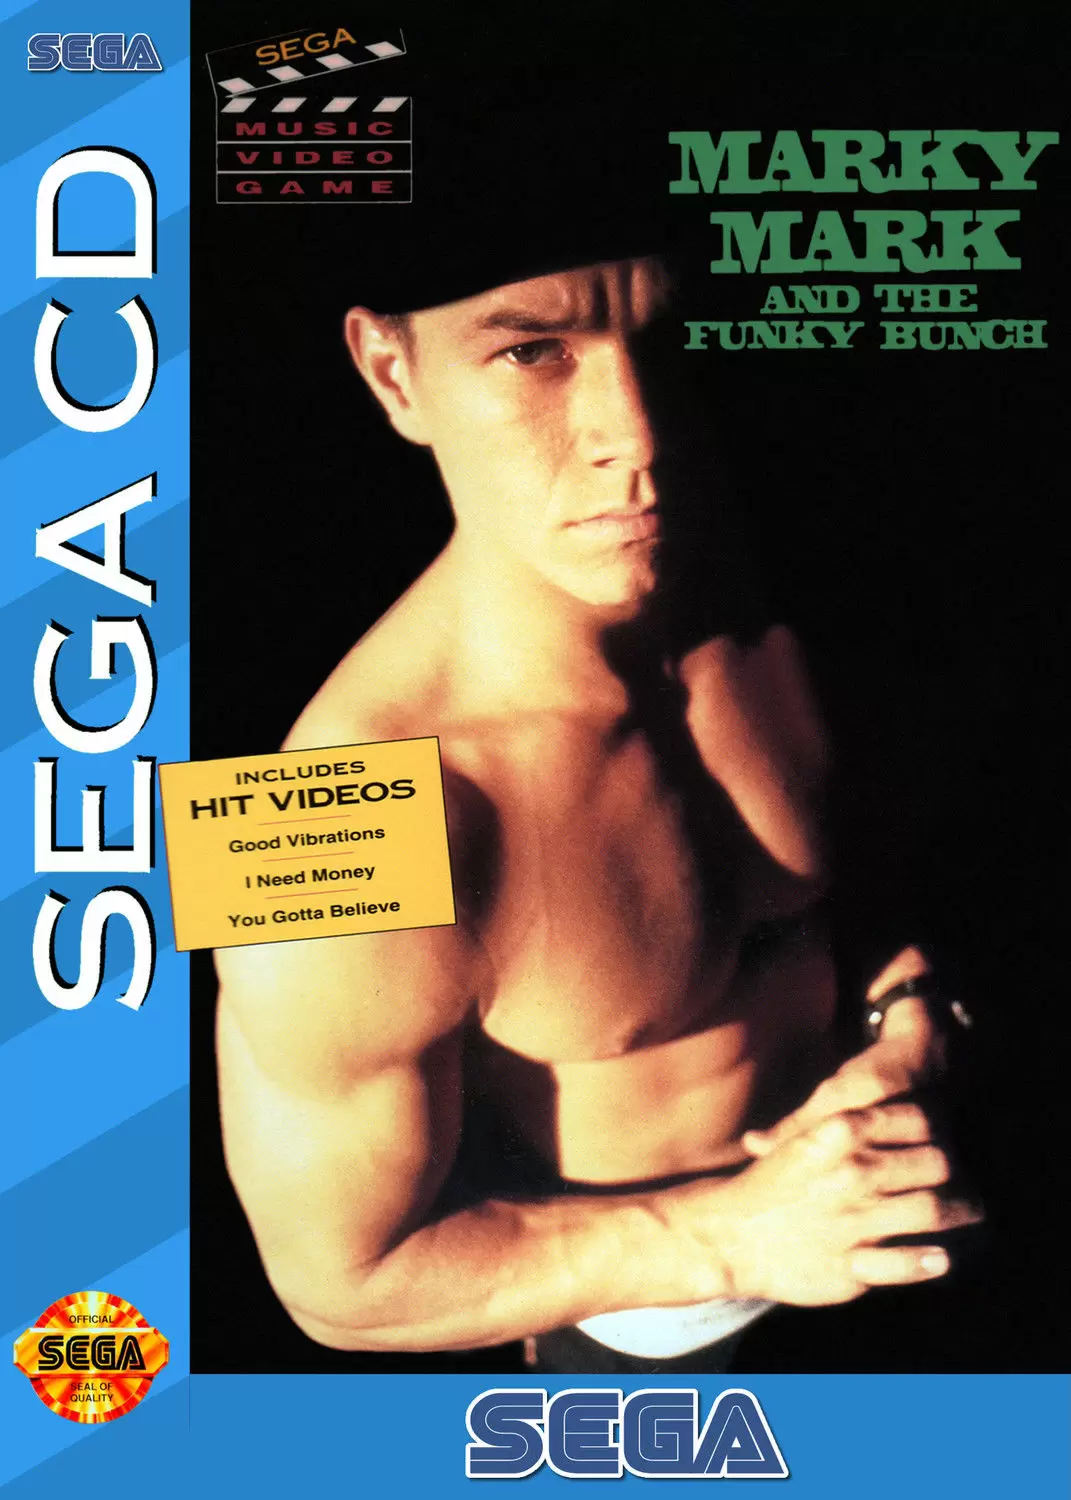 SEGA Mega CD Games - Marky Mark and the Funky Bunch: Make My Video